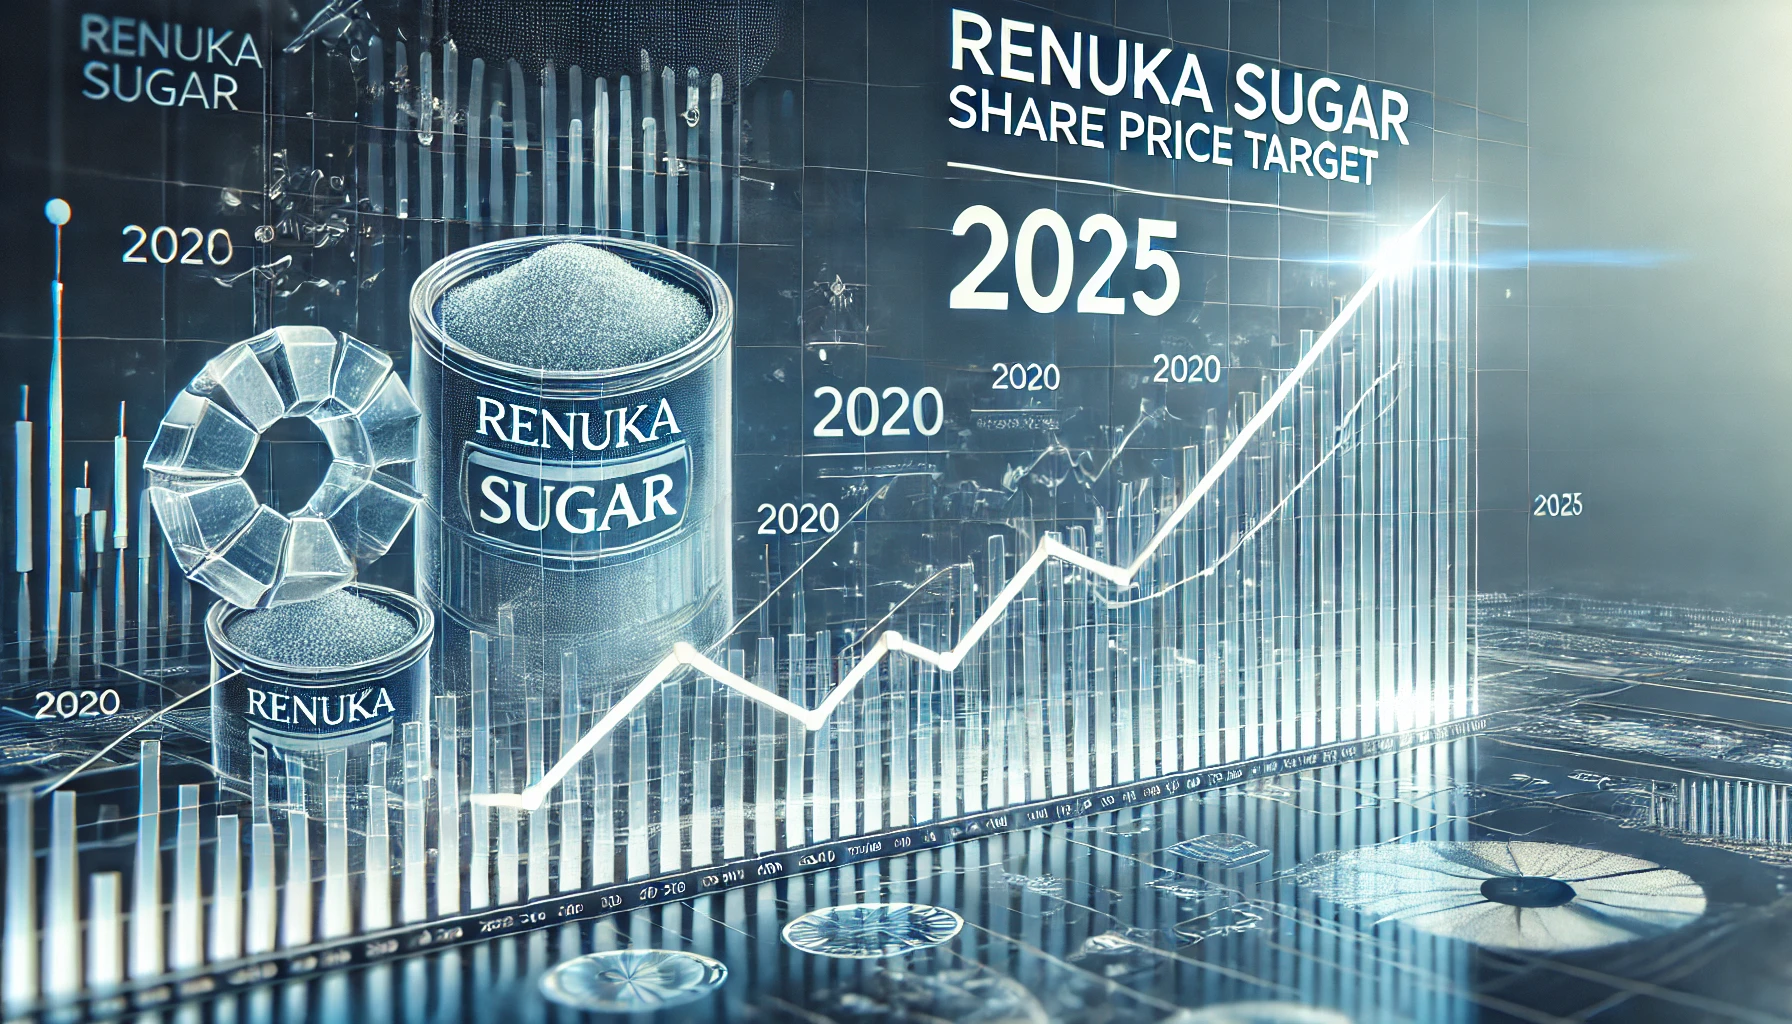 Renuka Sugar Share Price Target 2025